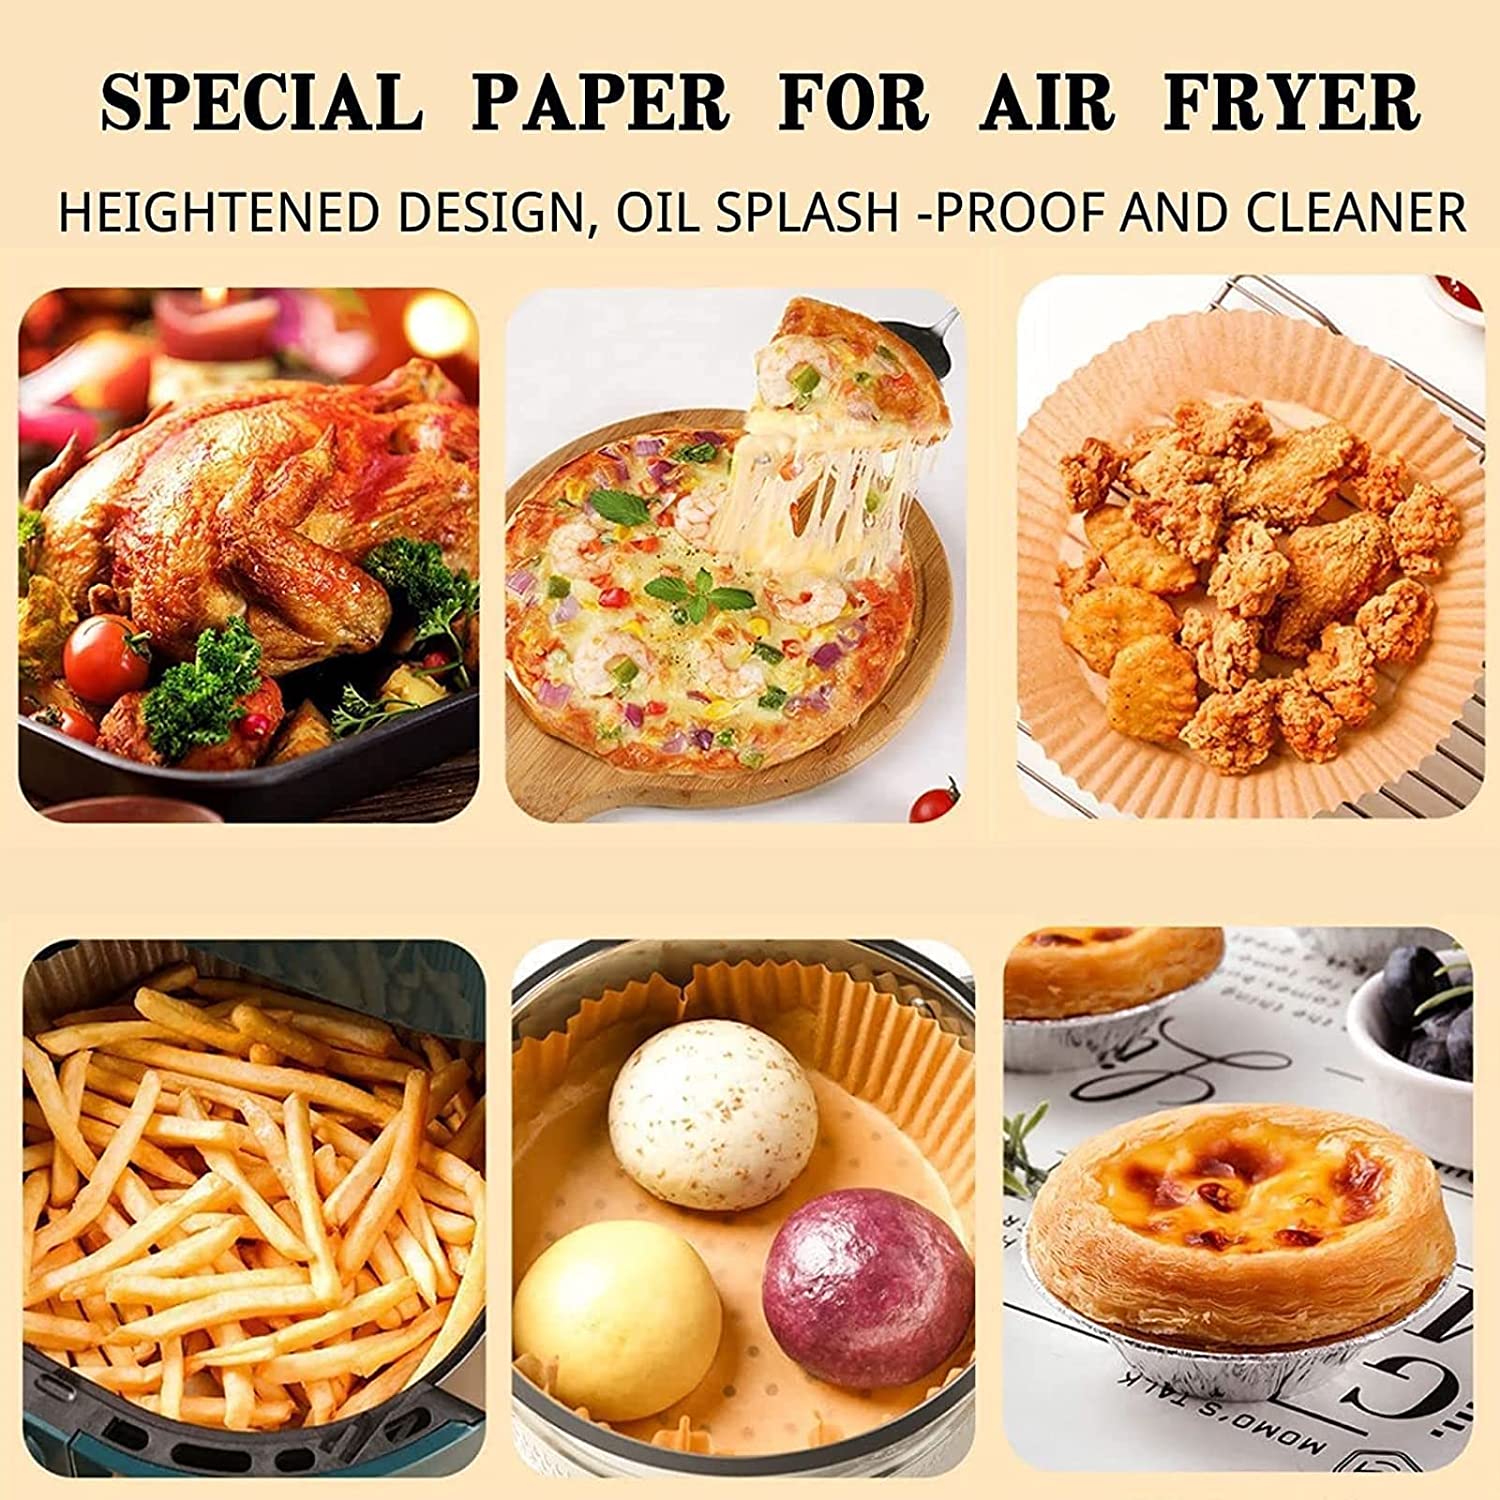 Air Fryer Disposable Paper Liner – Fulfillman